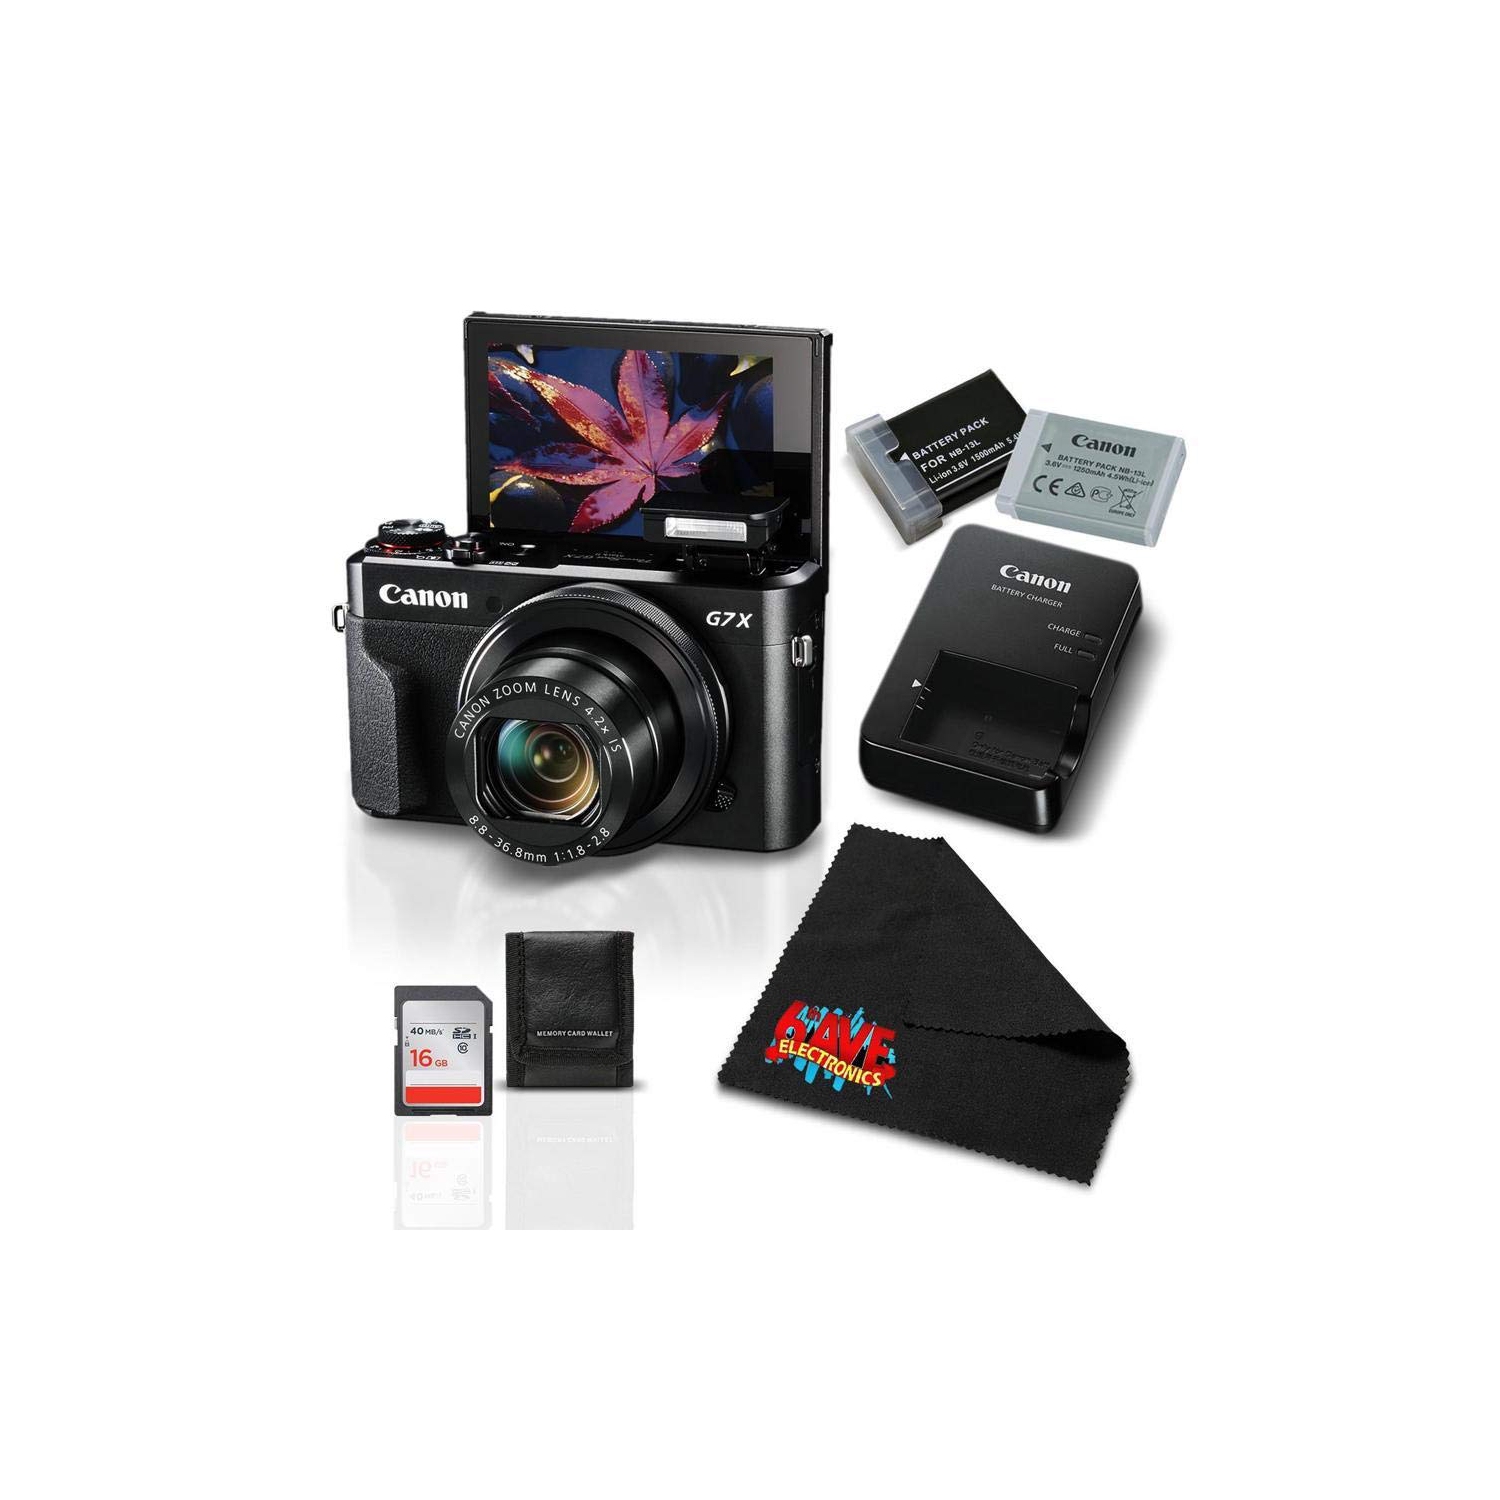 Canon PowerShot G7 X Mark II Digital Camera 1066C001 (International Model) Bundle with Spare Battery + 16GB Memory Card